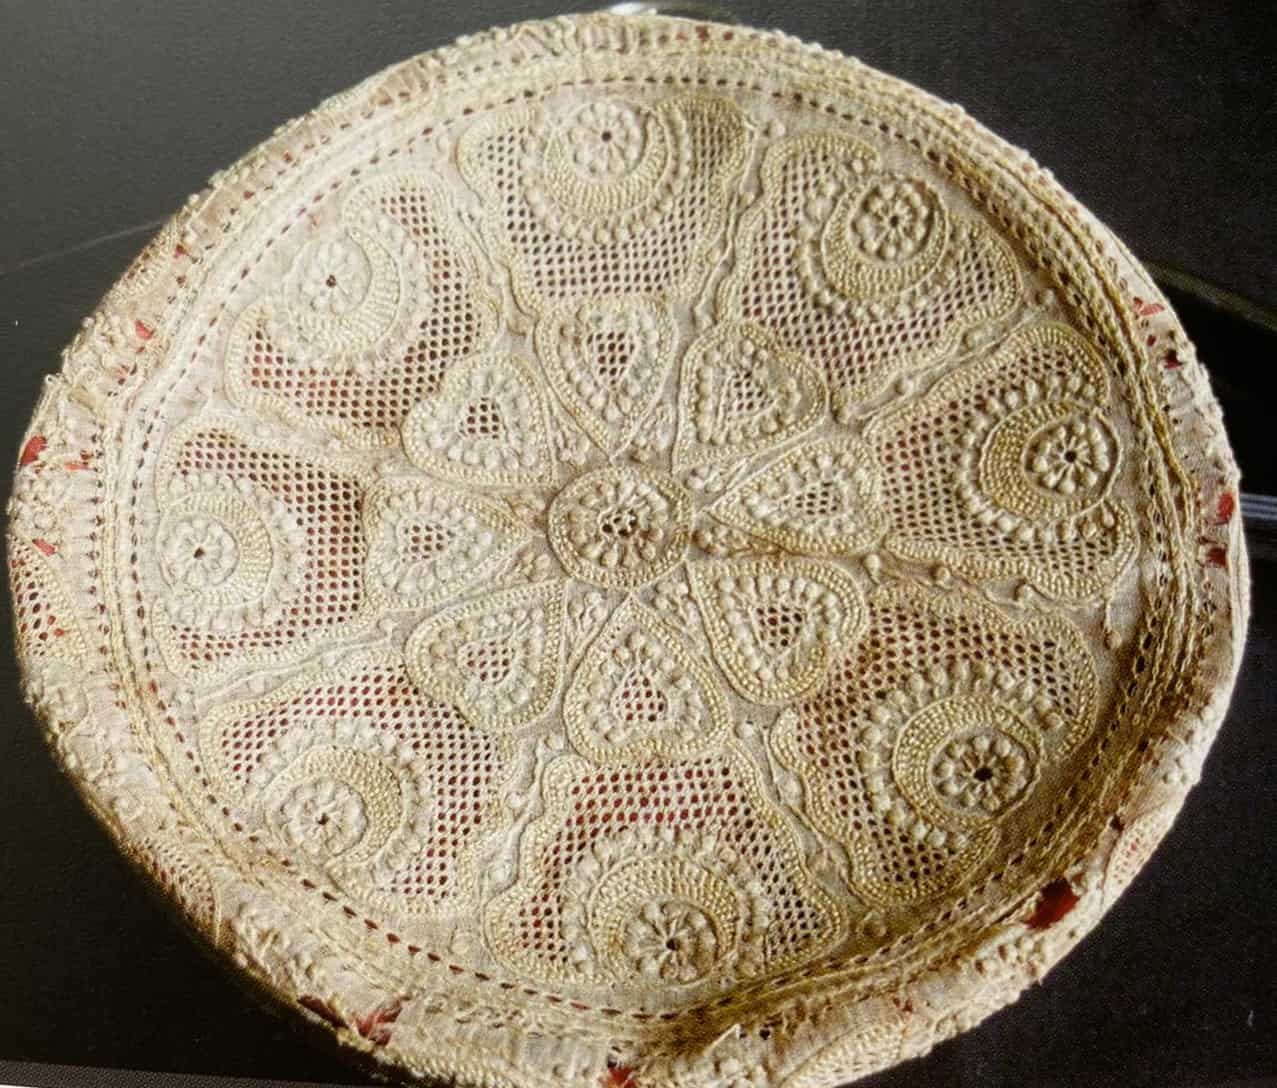 Chikankari Embroidery